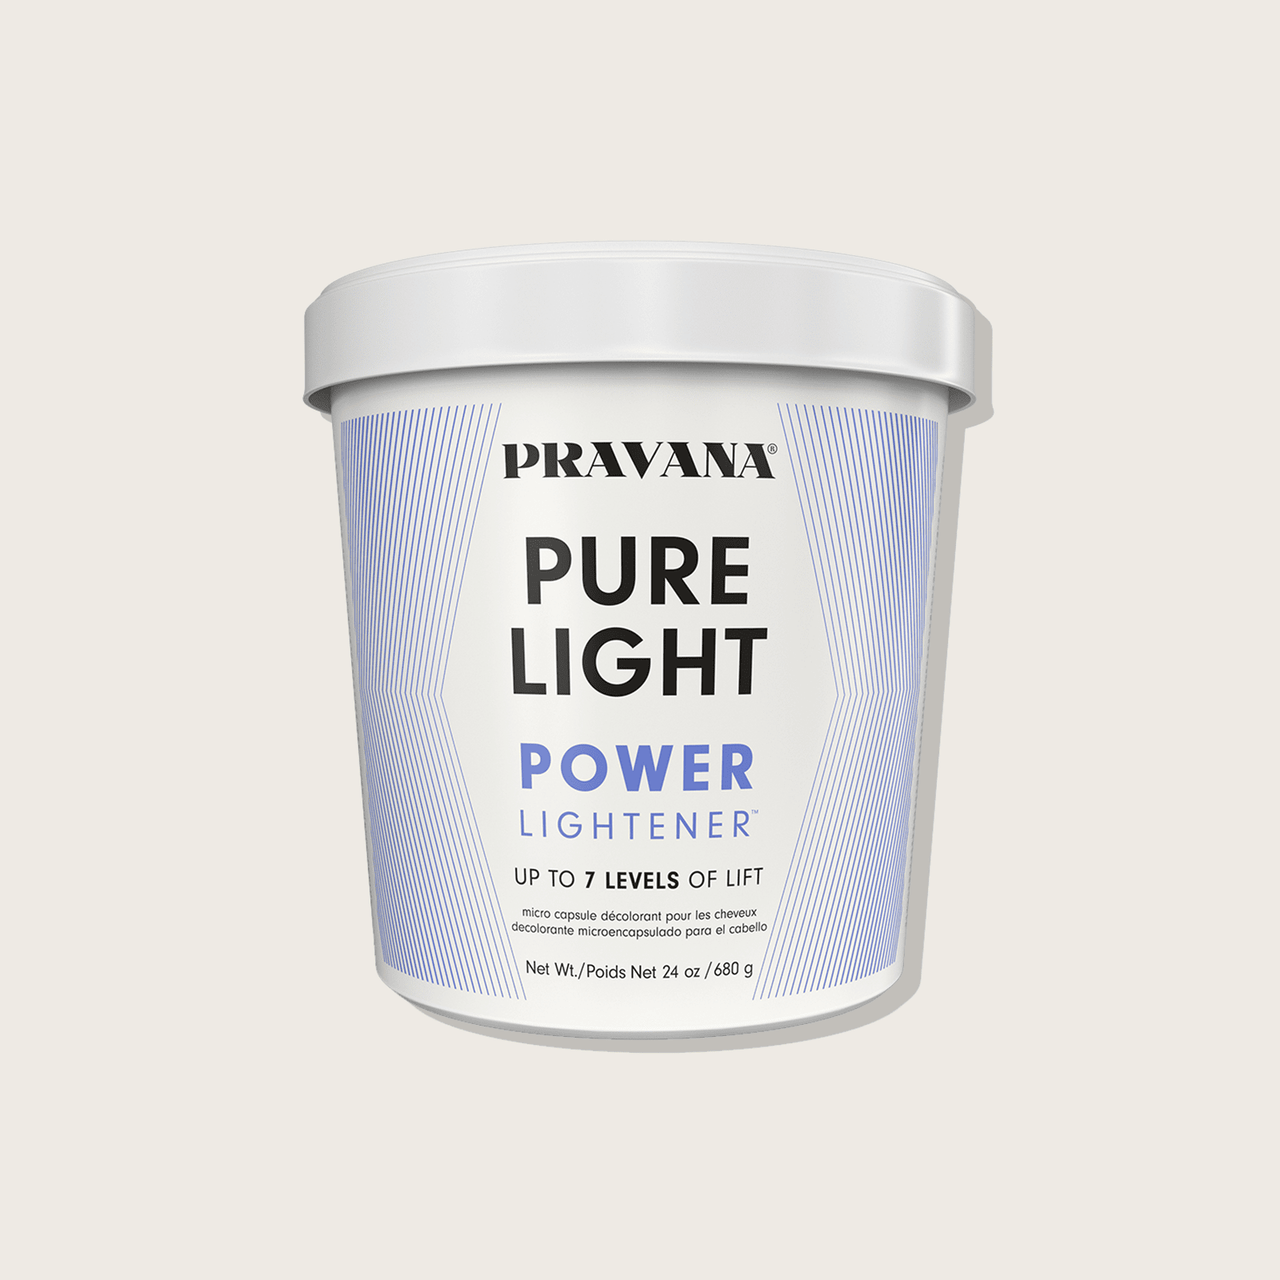 Pravana Pure Light Power Lightener 